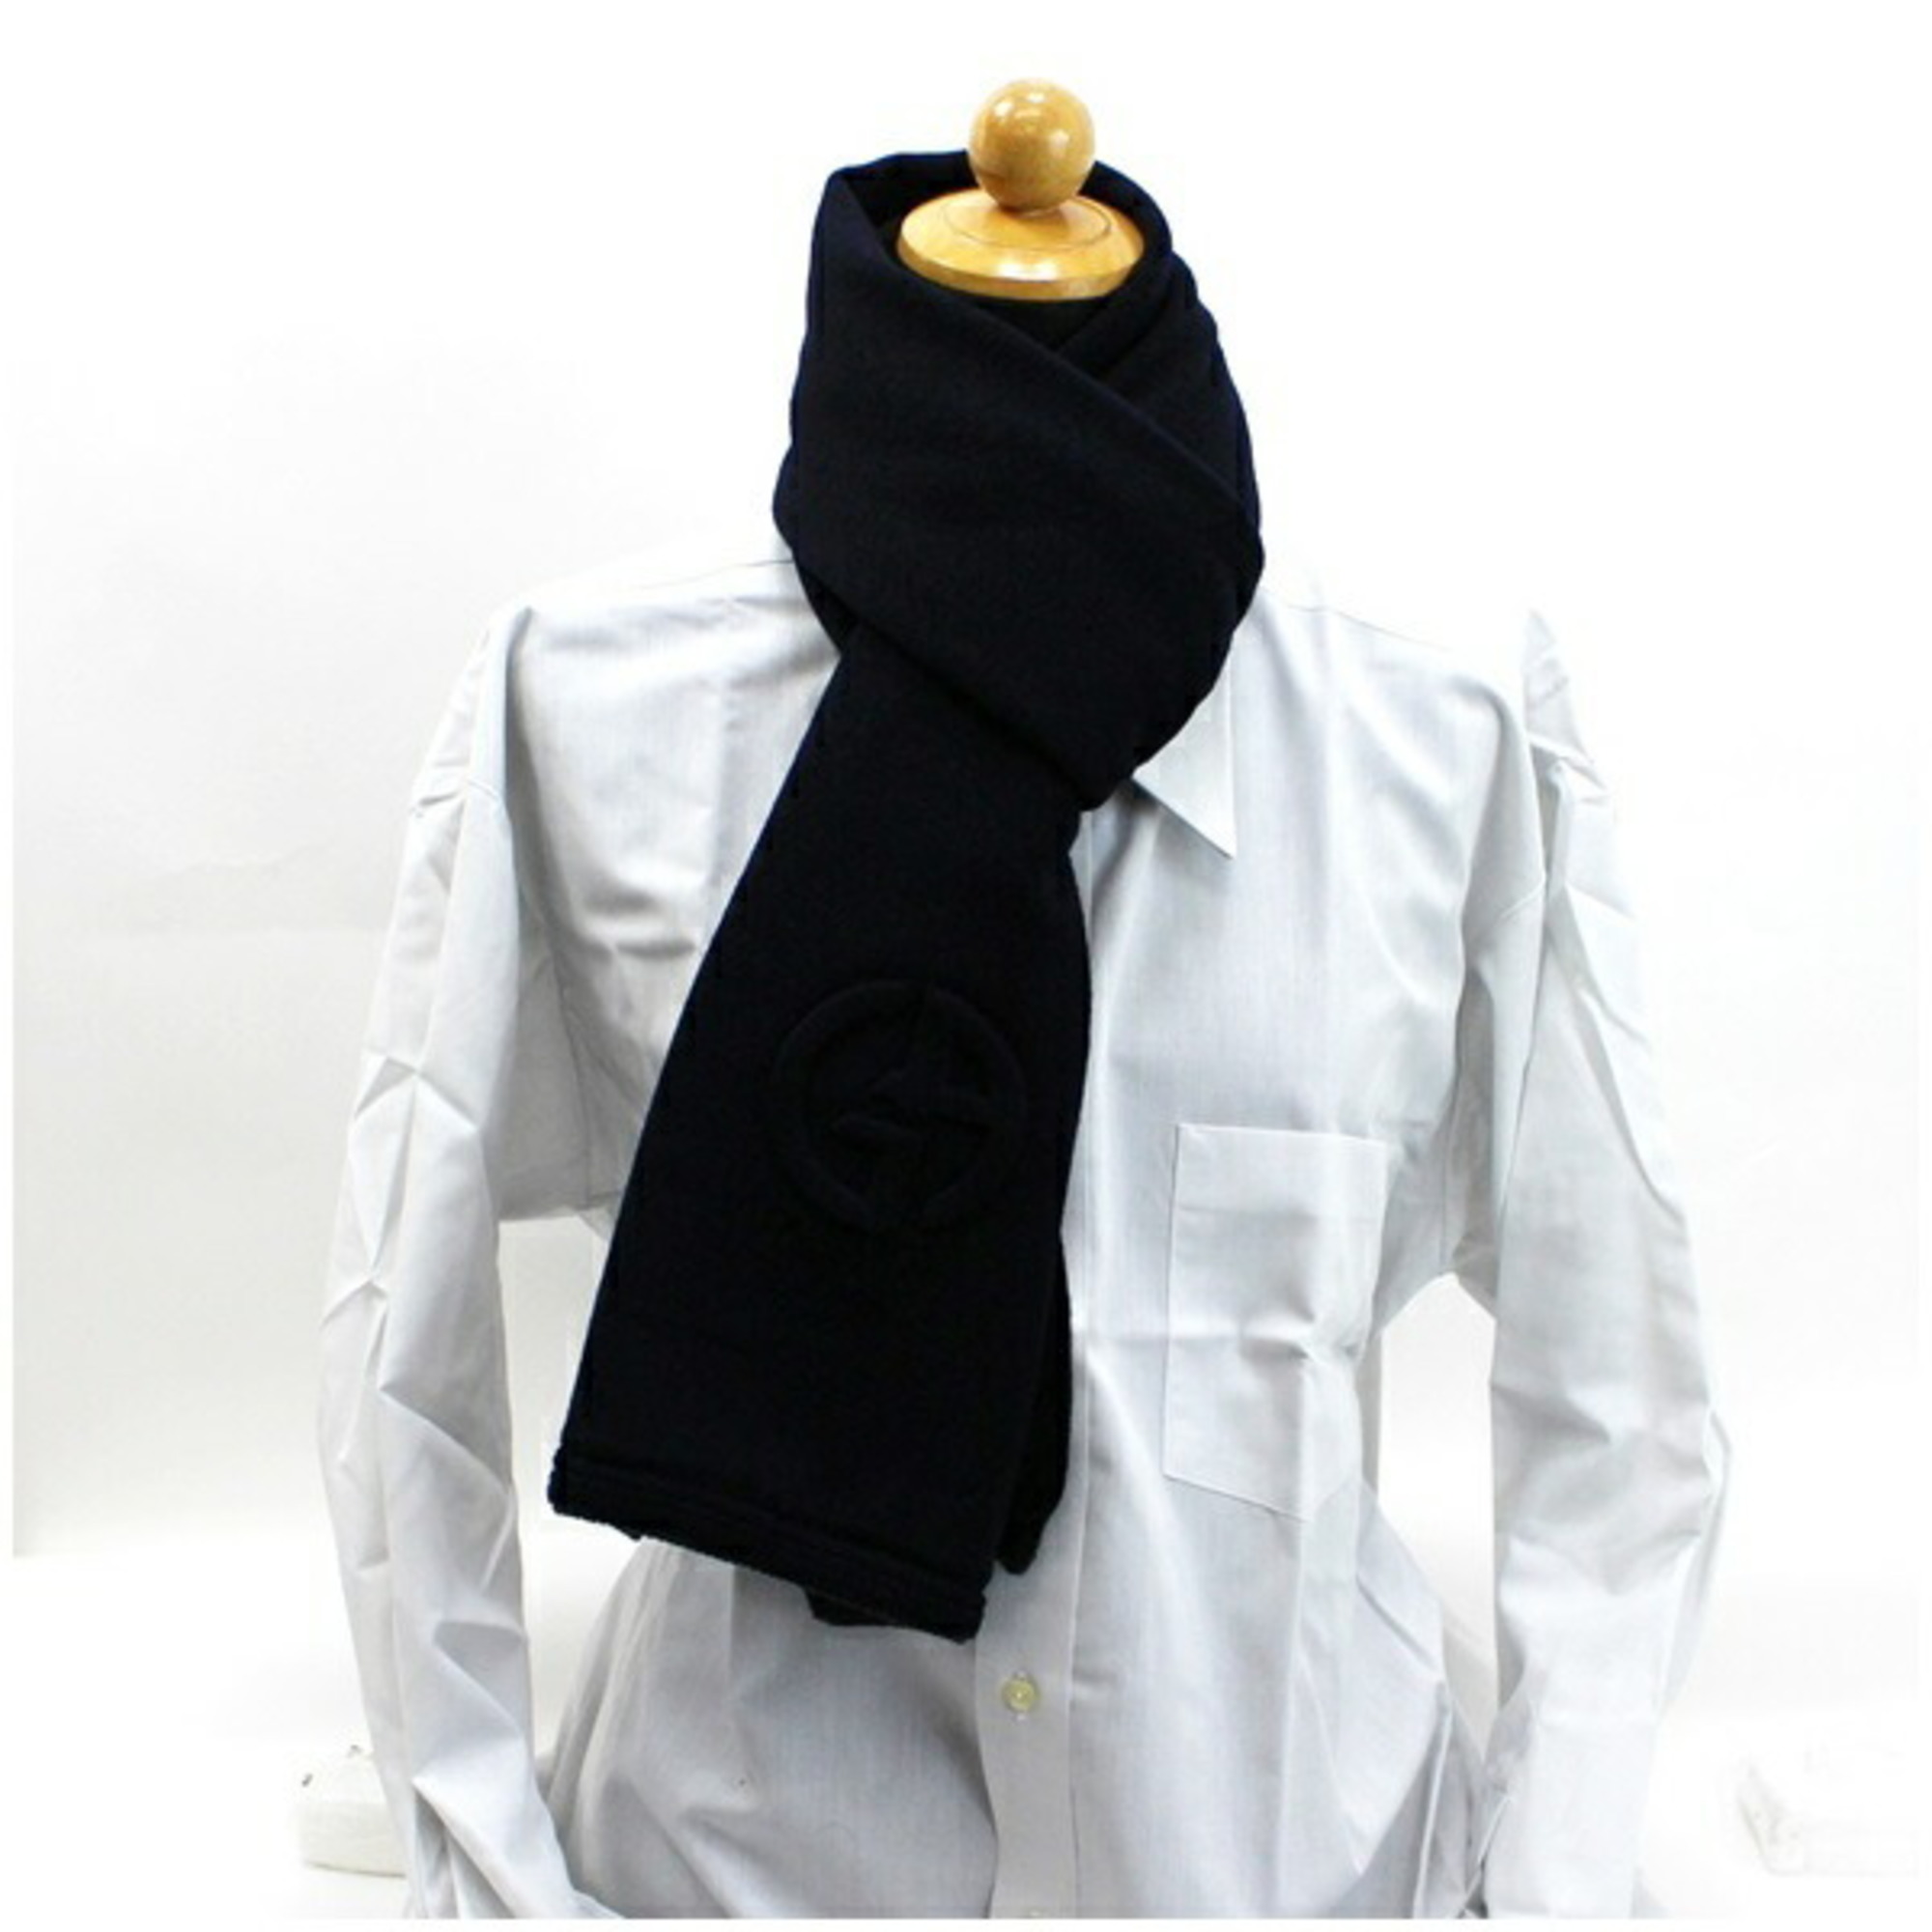 Giorgio Armani wool scarf navy x gray 168 28 cm GIORGIO ARMANI men's women's reversible